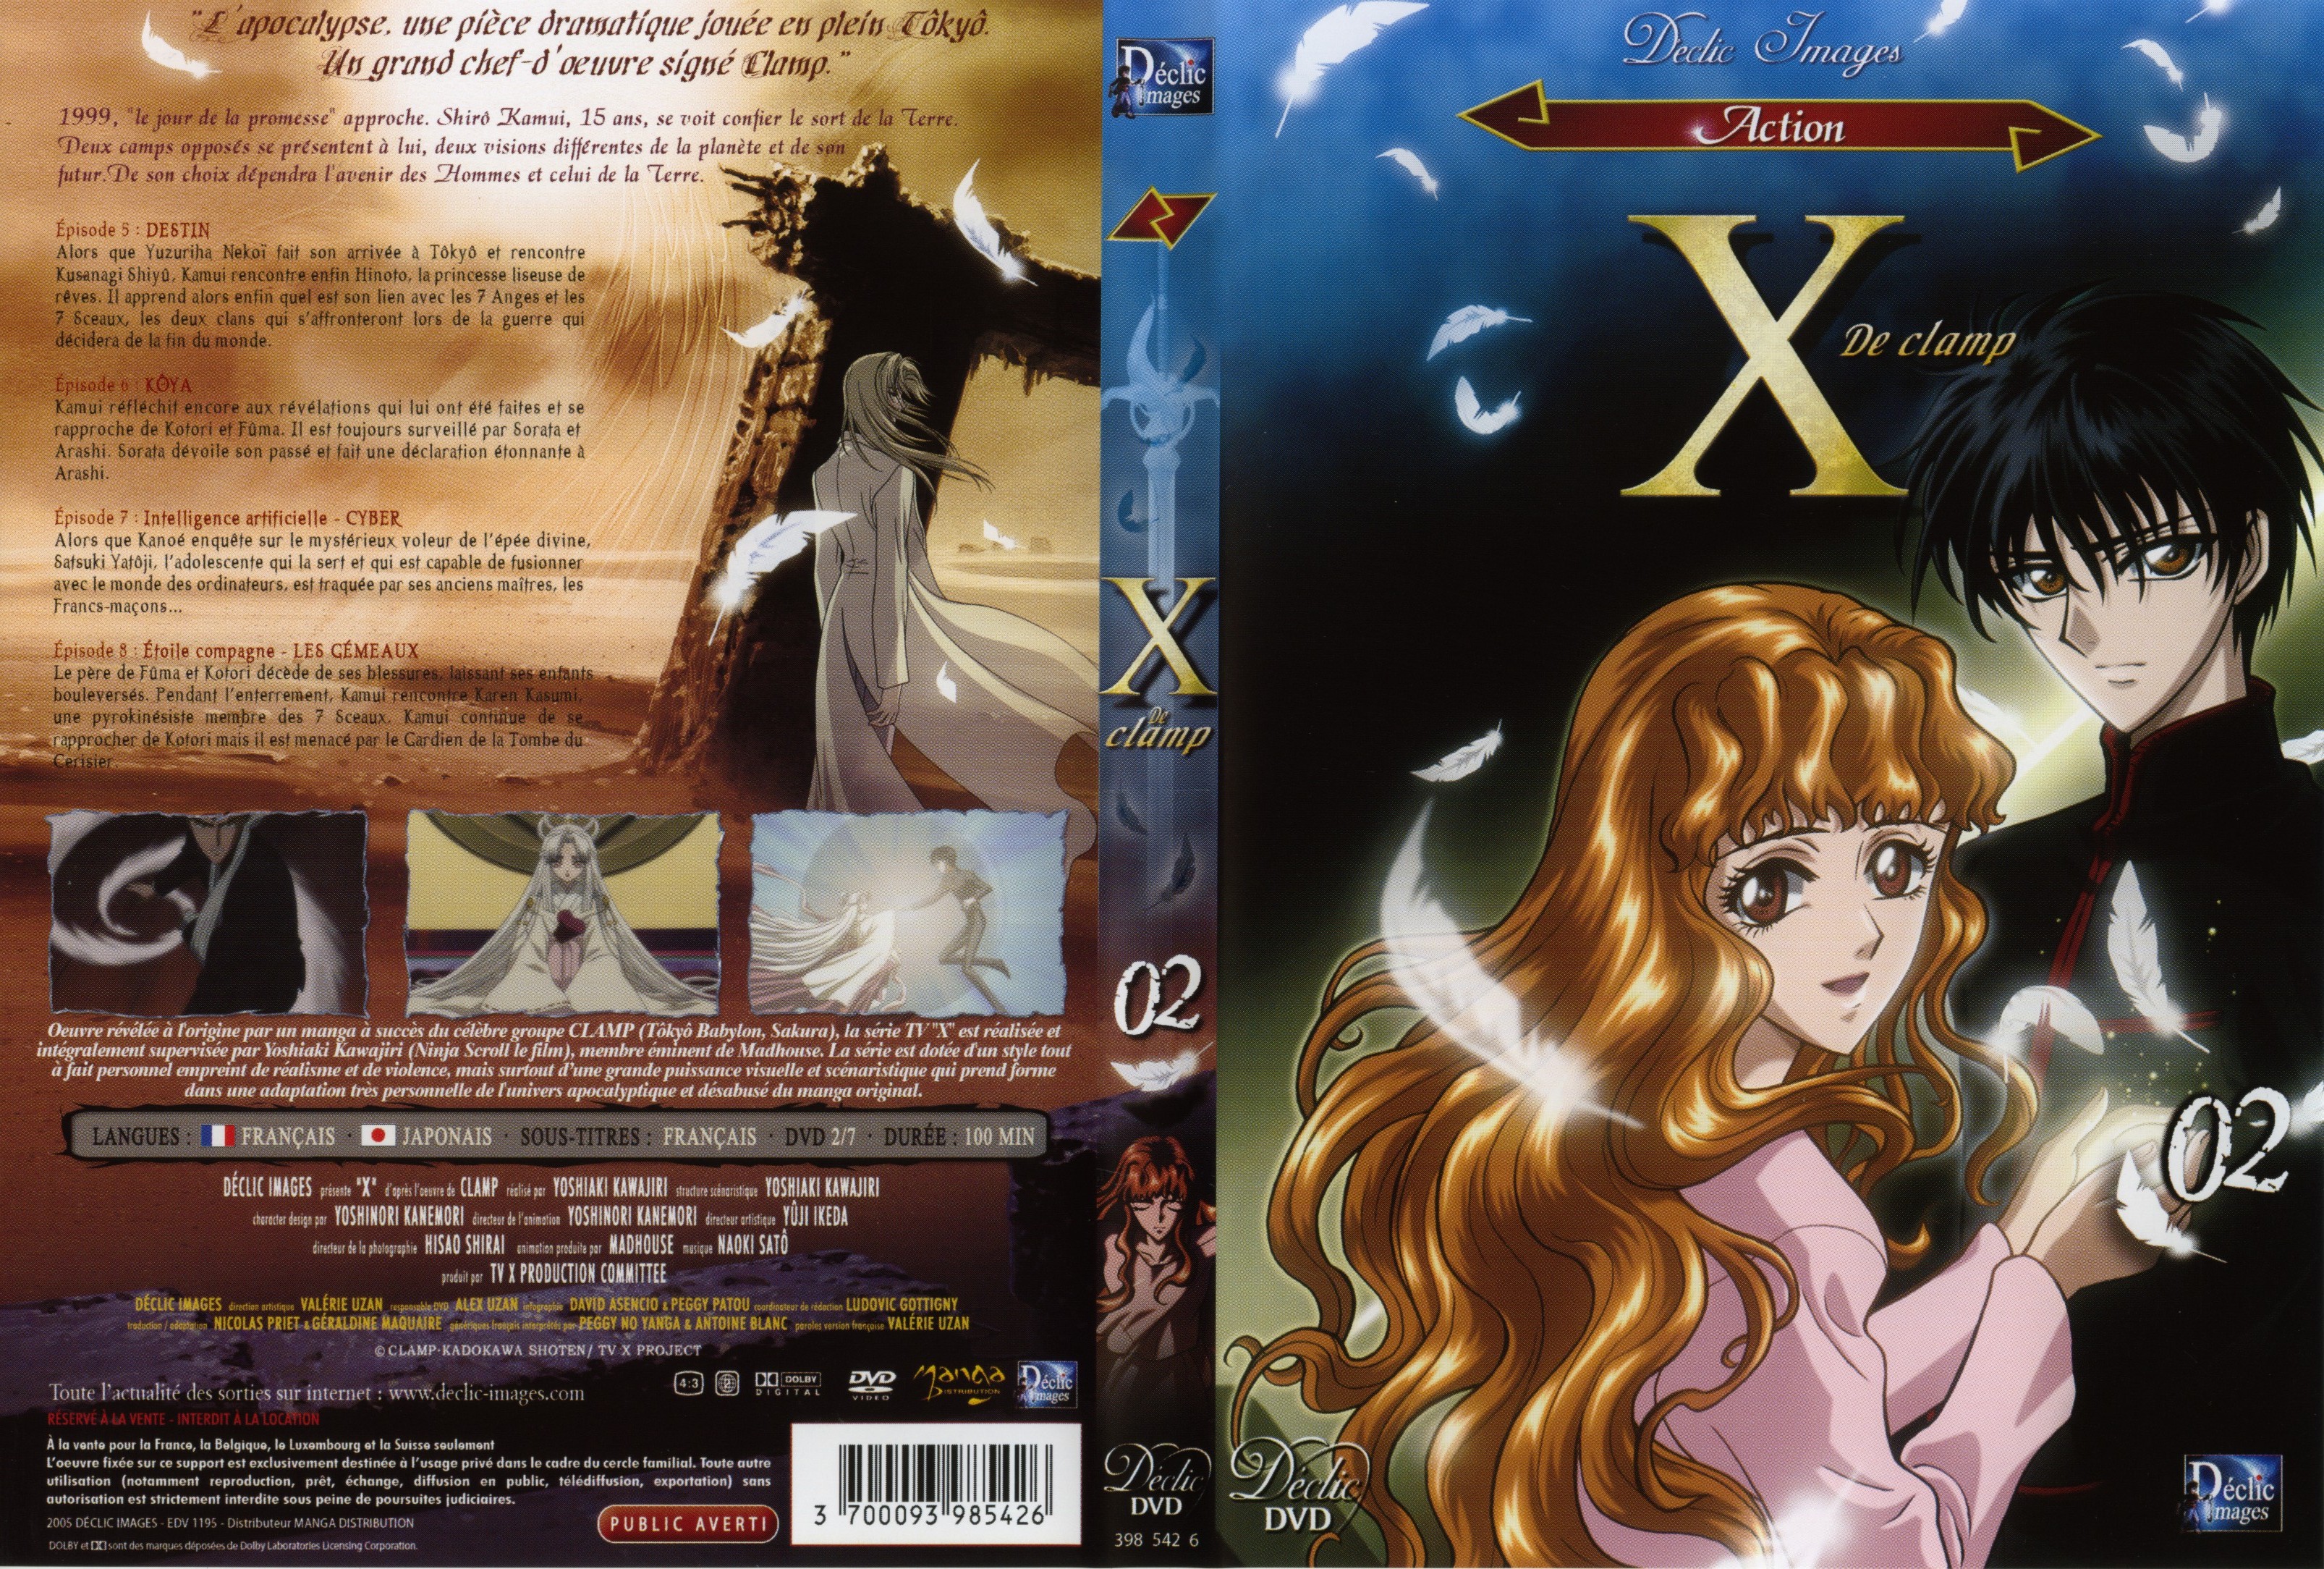 Jaquette DVD X de clamp vol 2